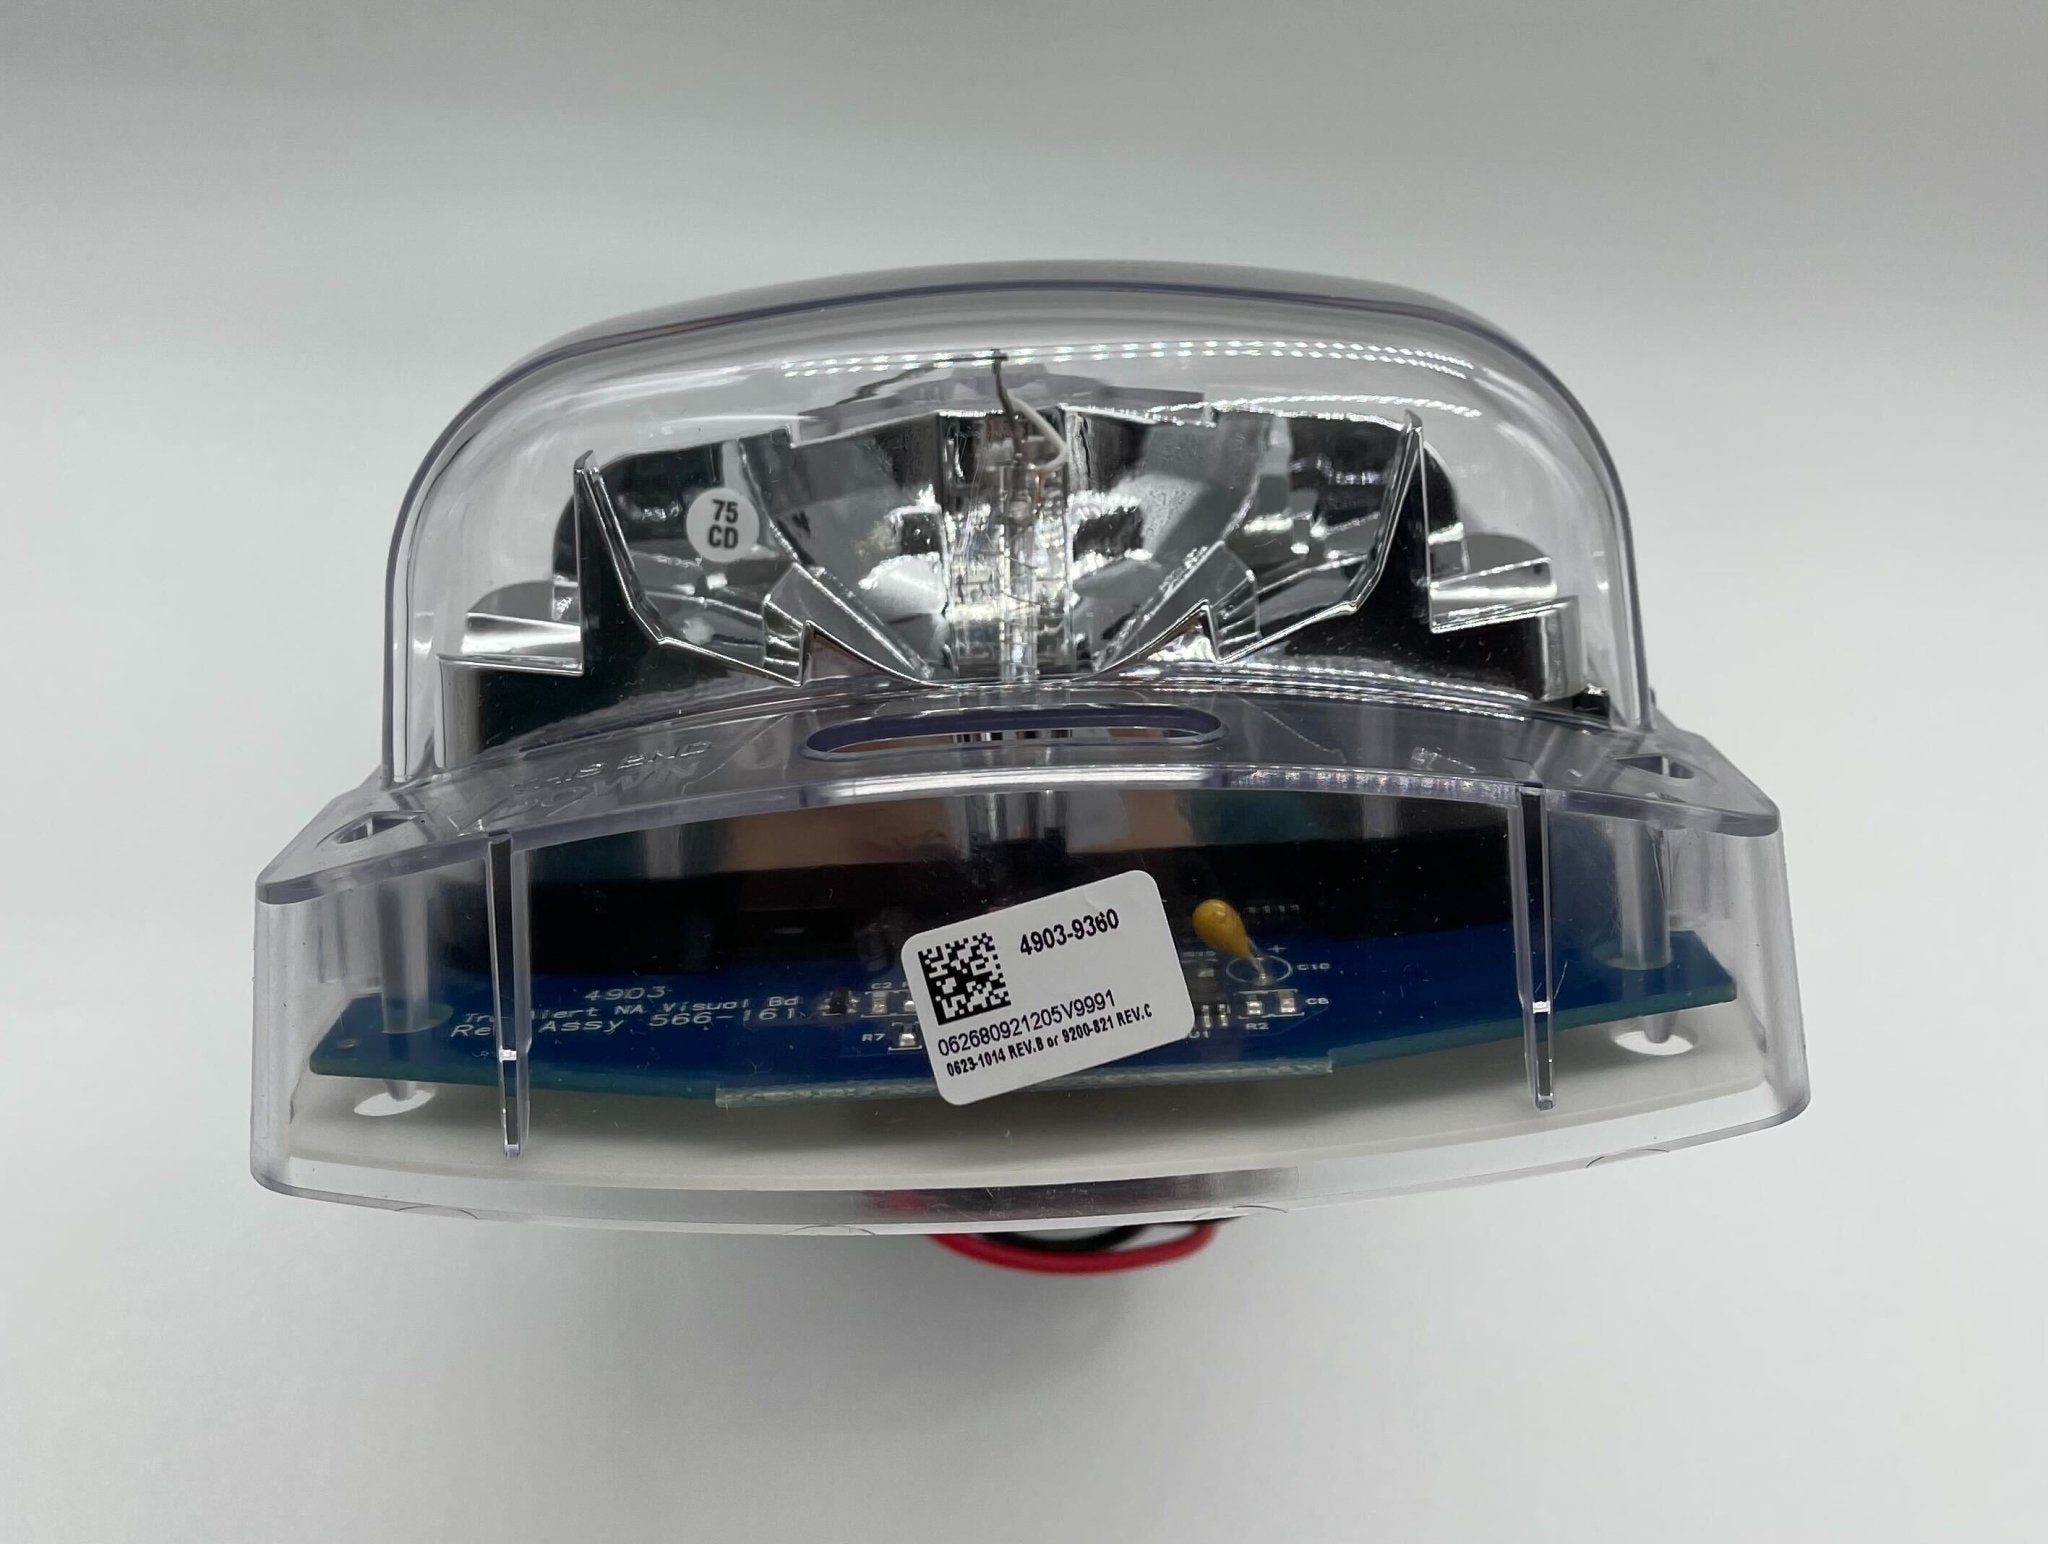 Simplex 4903-9360 - The Fire Alarm Supplier